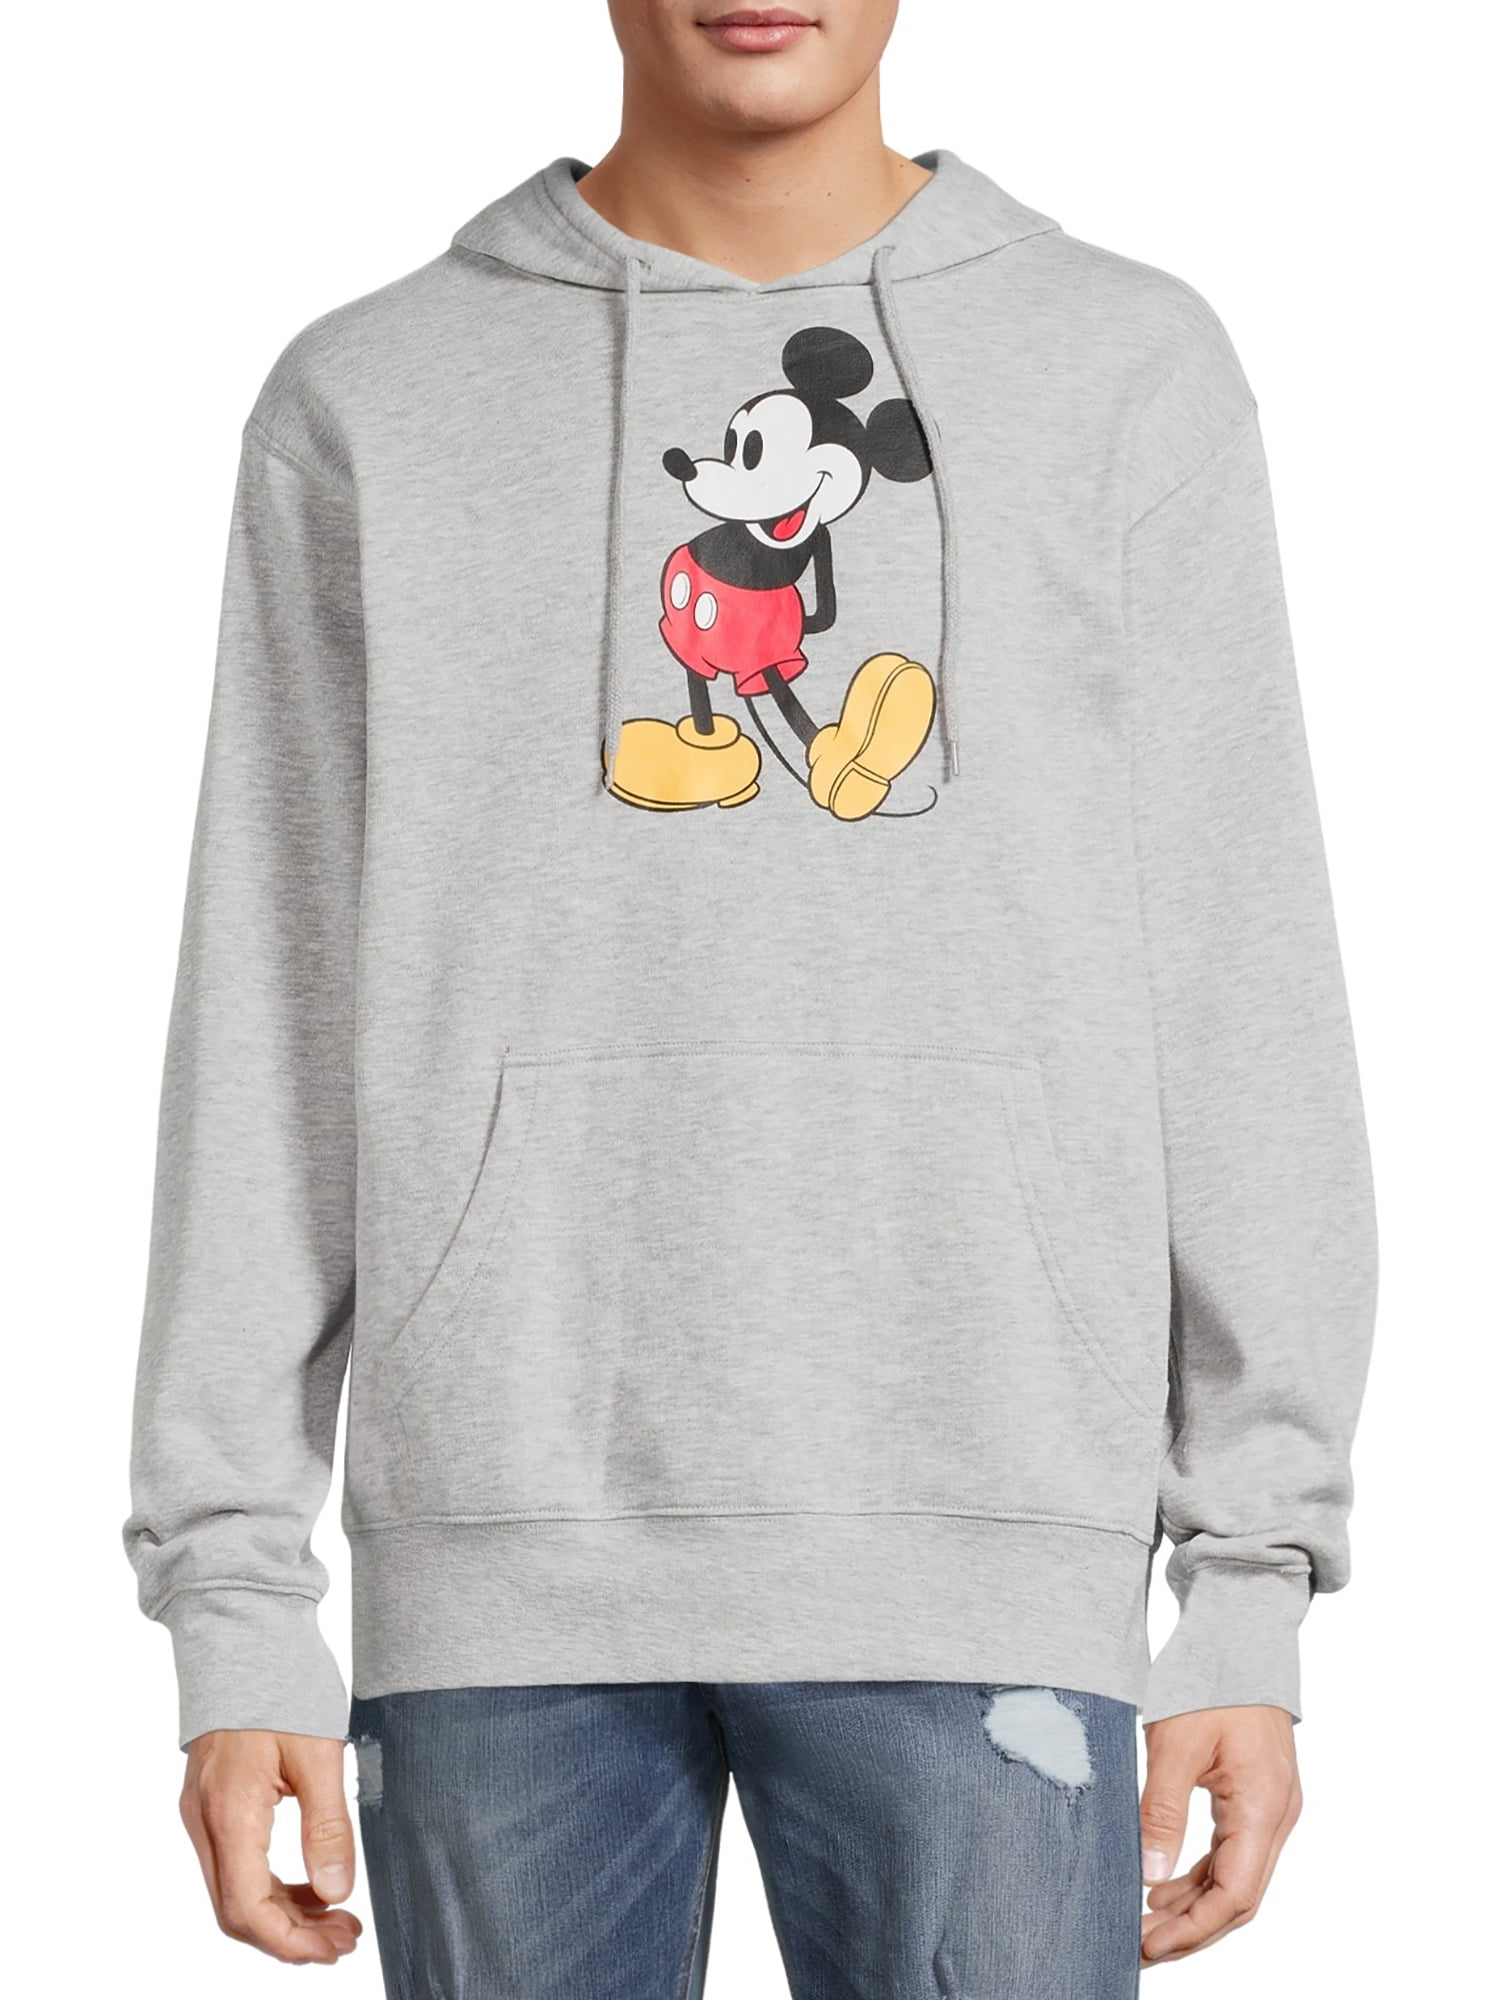 Vintage Disney Mickey Mouse Full Print Crewneck Pullover Sweatshirt